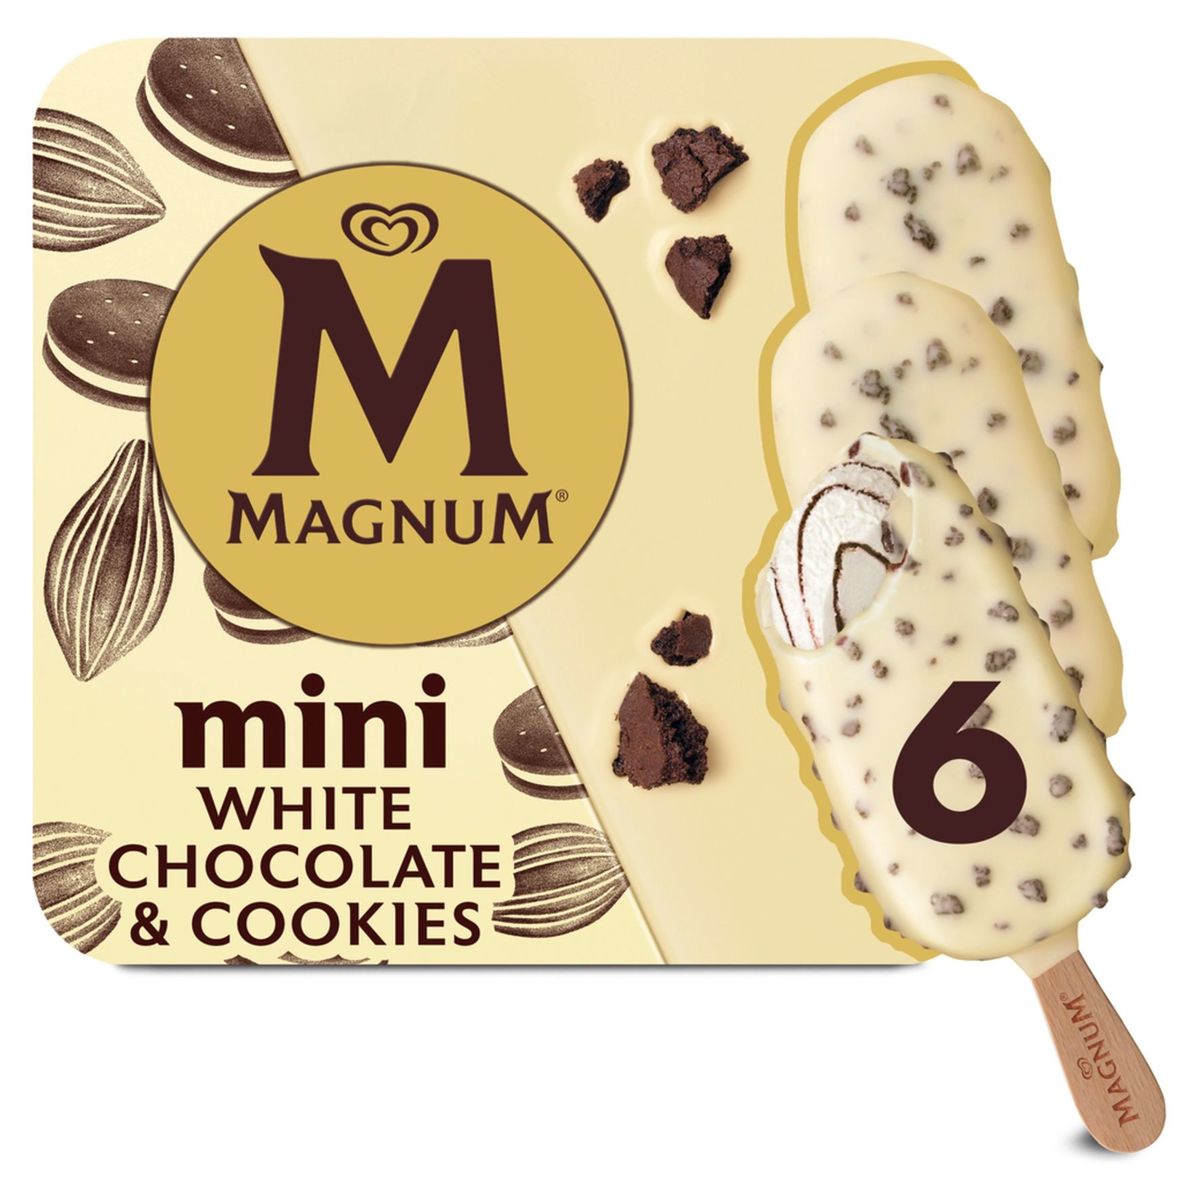 Magnum Ola Ijs Multipack White Chocolate & Cookies 6 x 55 ml